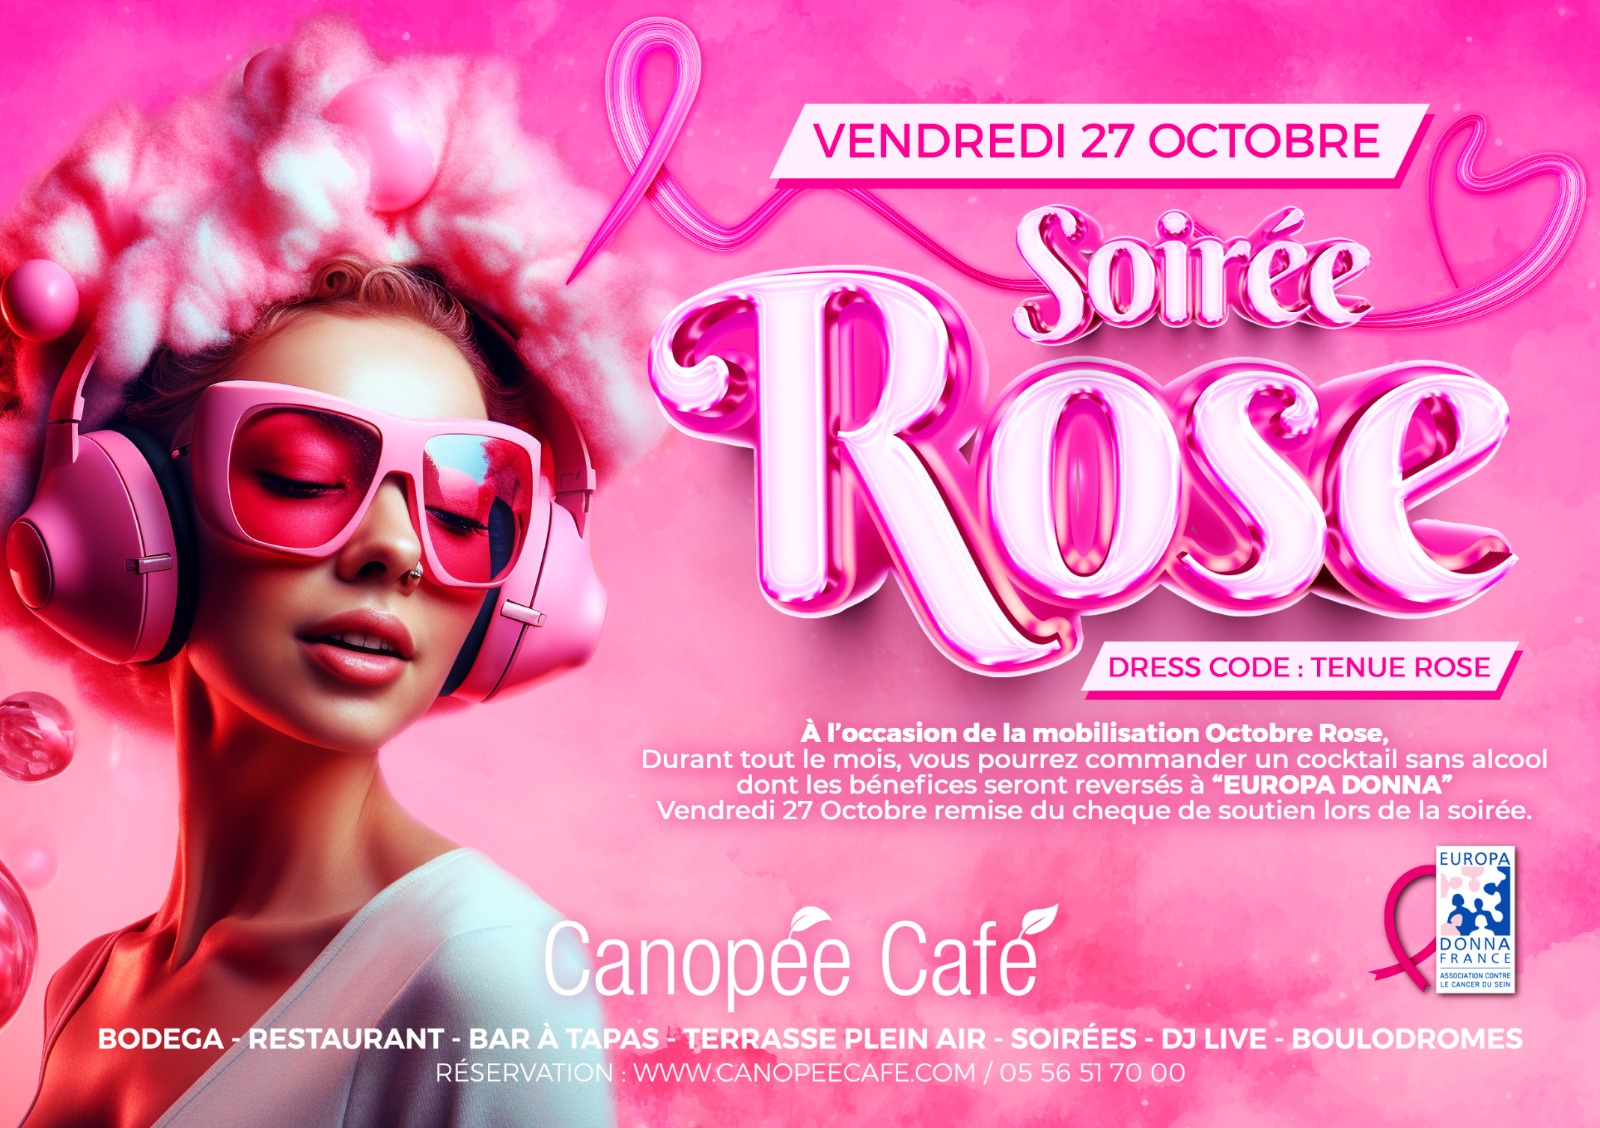 Canopee Cafe Restaurant Merignac Affiche Soiree Rose Jimmy Hurson